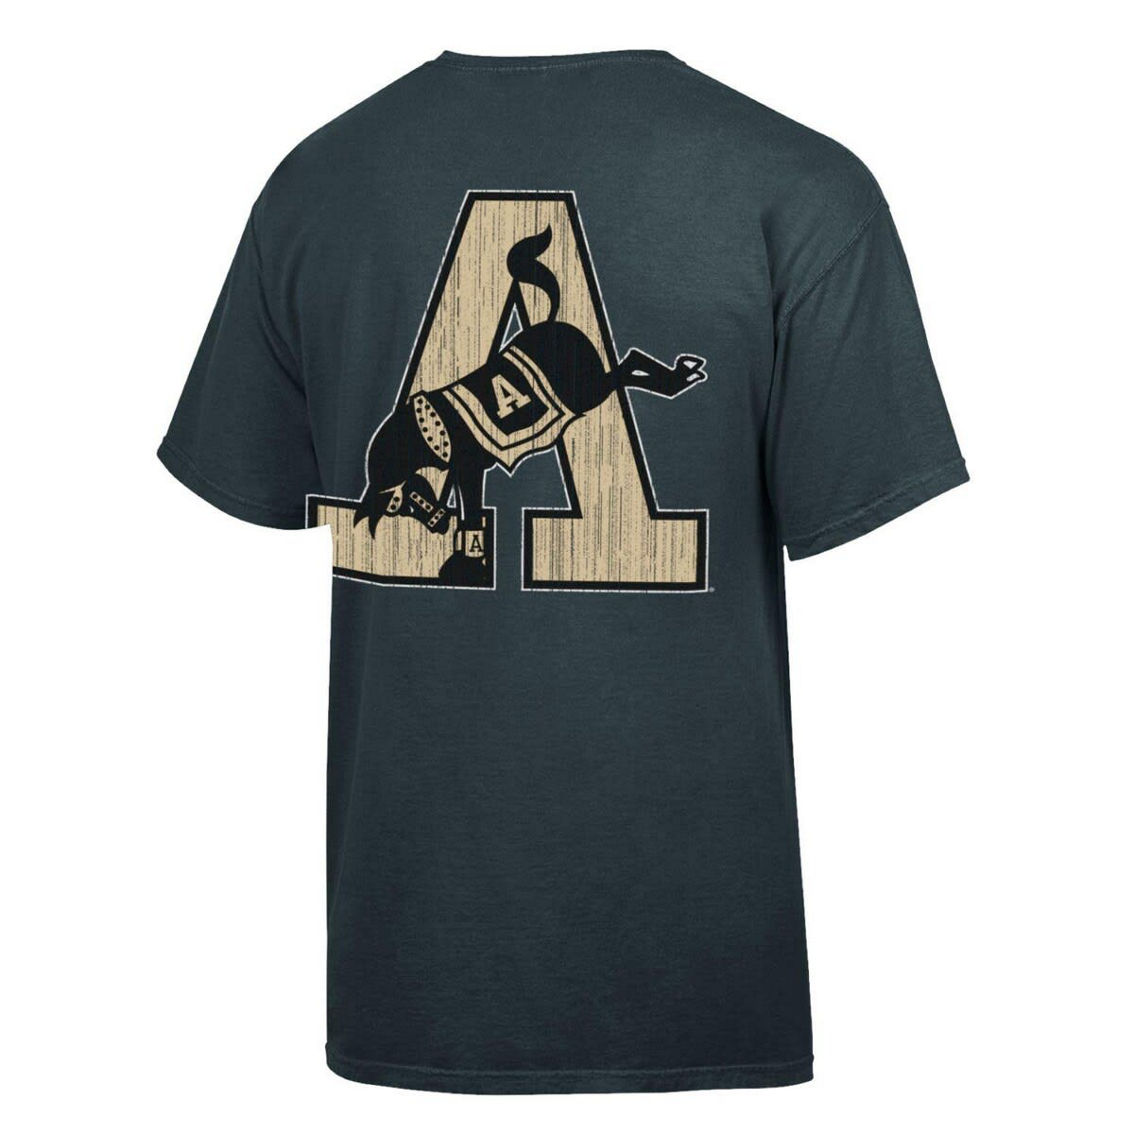 Comfort Wash Men's Comfort Wash Charcoal Army Black Knights Vintage Logo T-Shirt - Image 4 of 4